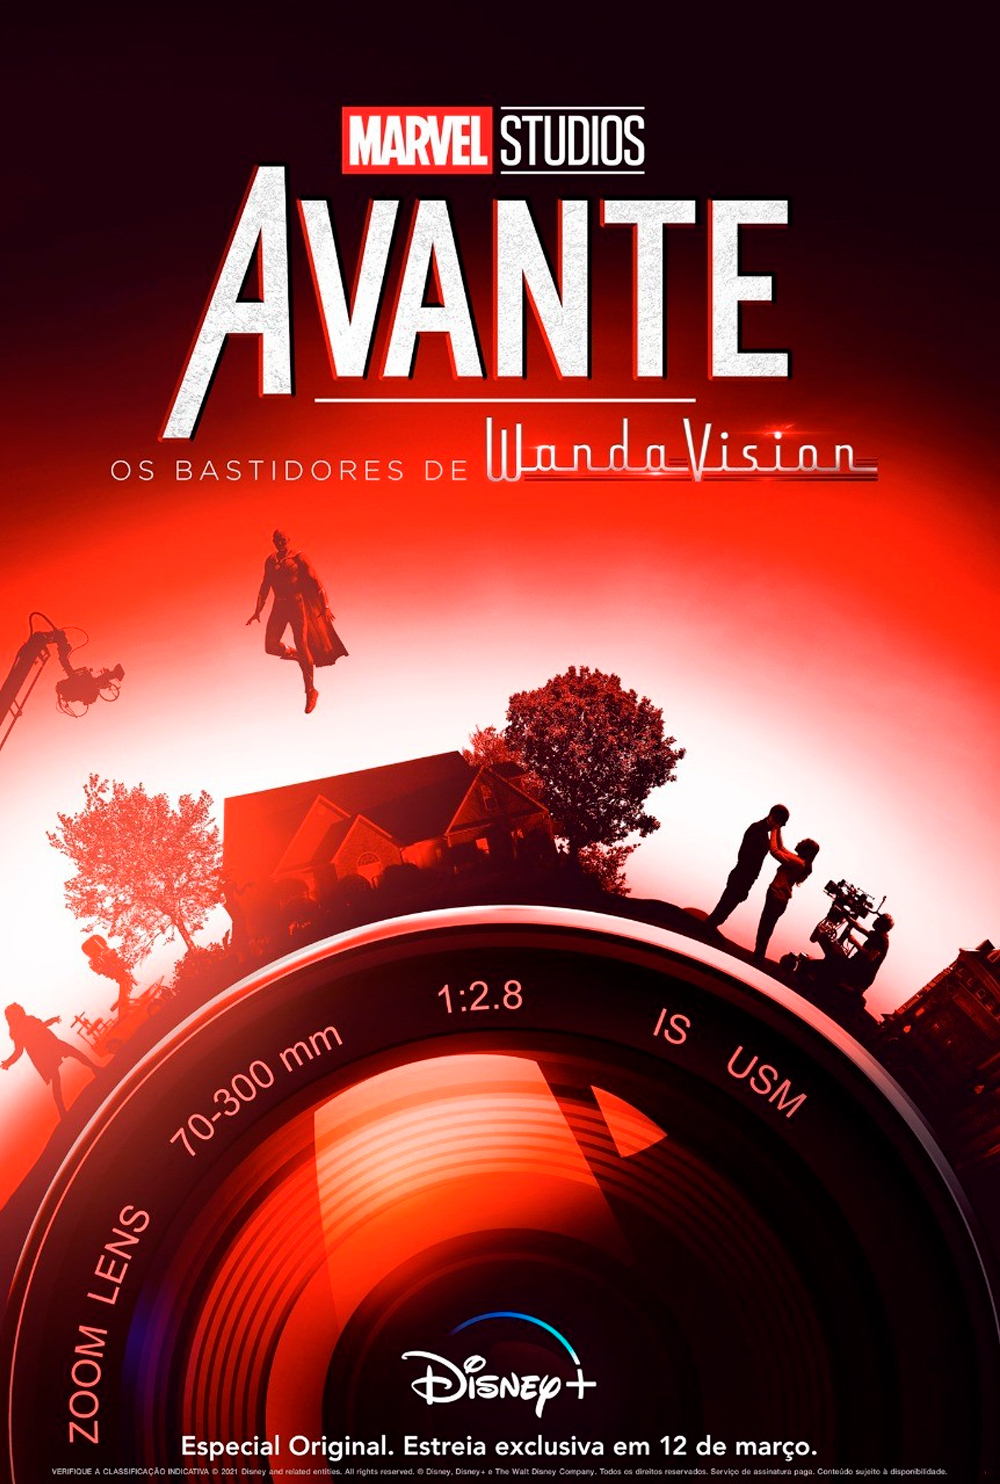 Primeiro poster oficial de "Avante", da Marvel Studios.